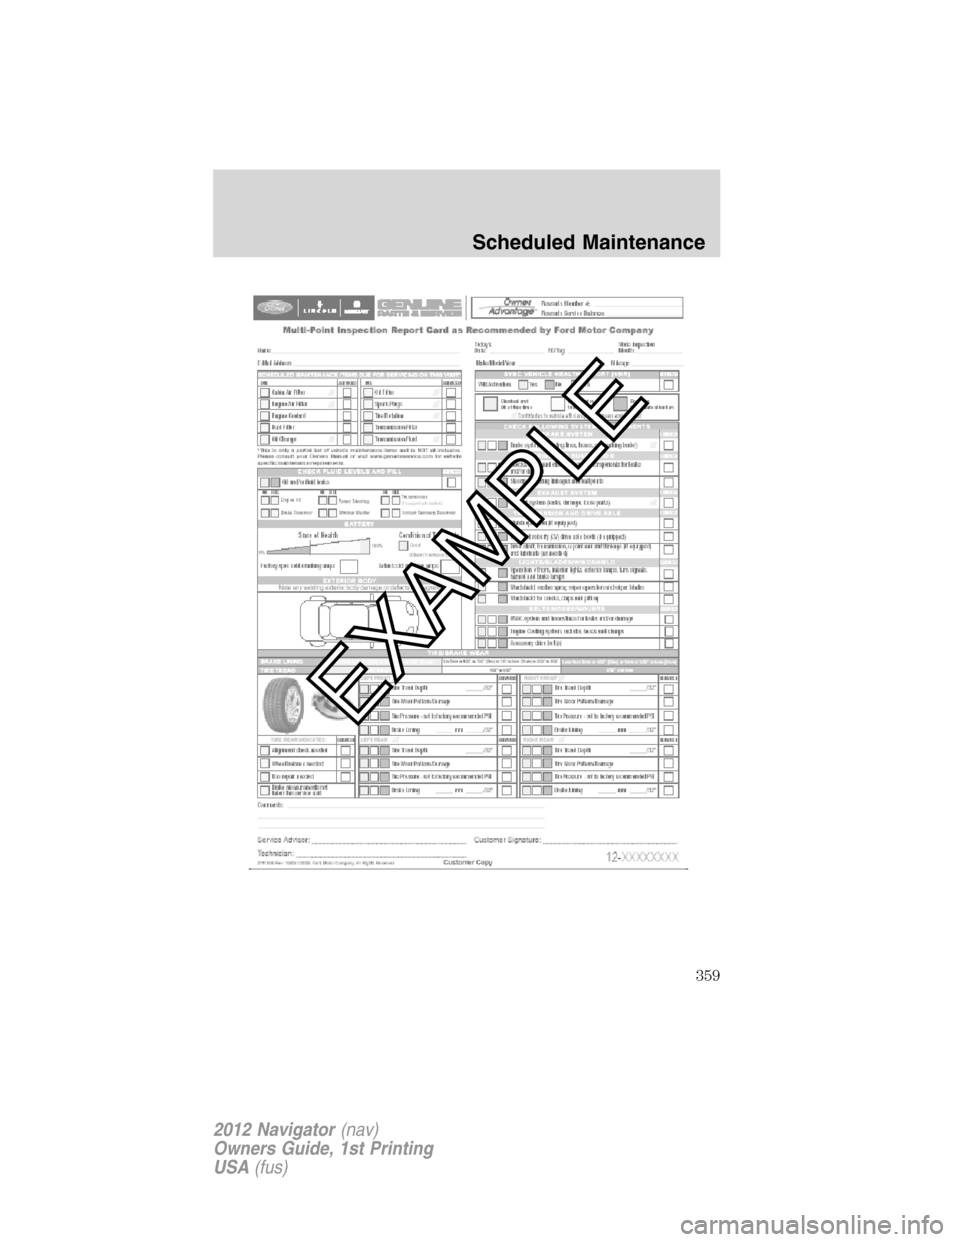 LINCOLN NAVIGATOR 2012  Navigation Manual Scheduled Maintenance
359
2012 Navigator(nav)
Owners Guide, 1st Printing
USA(fus) 